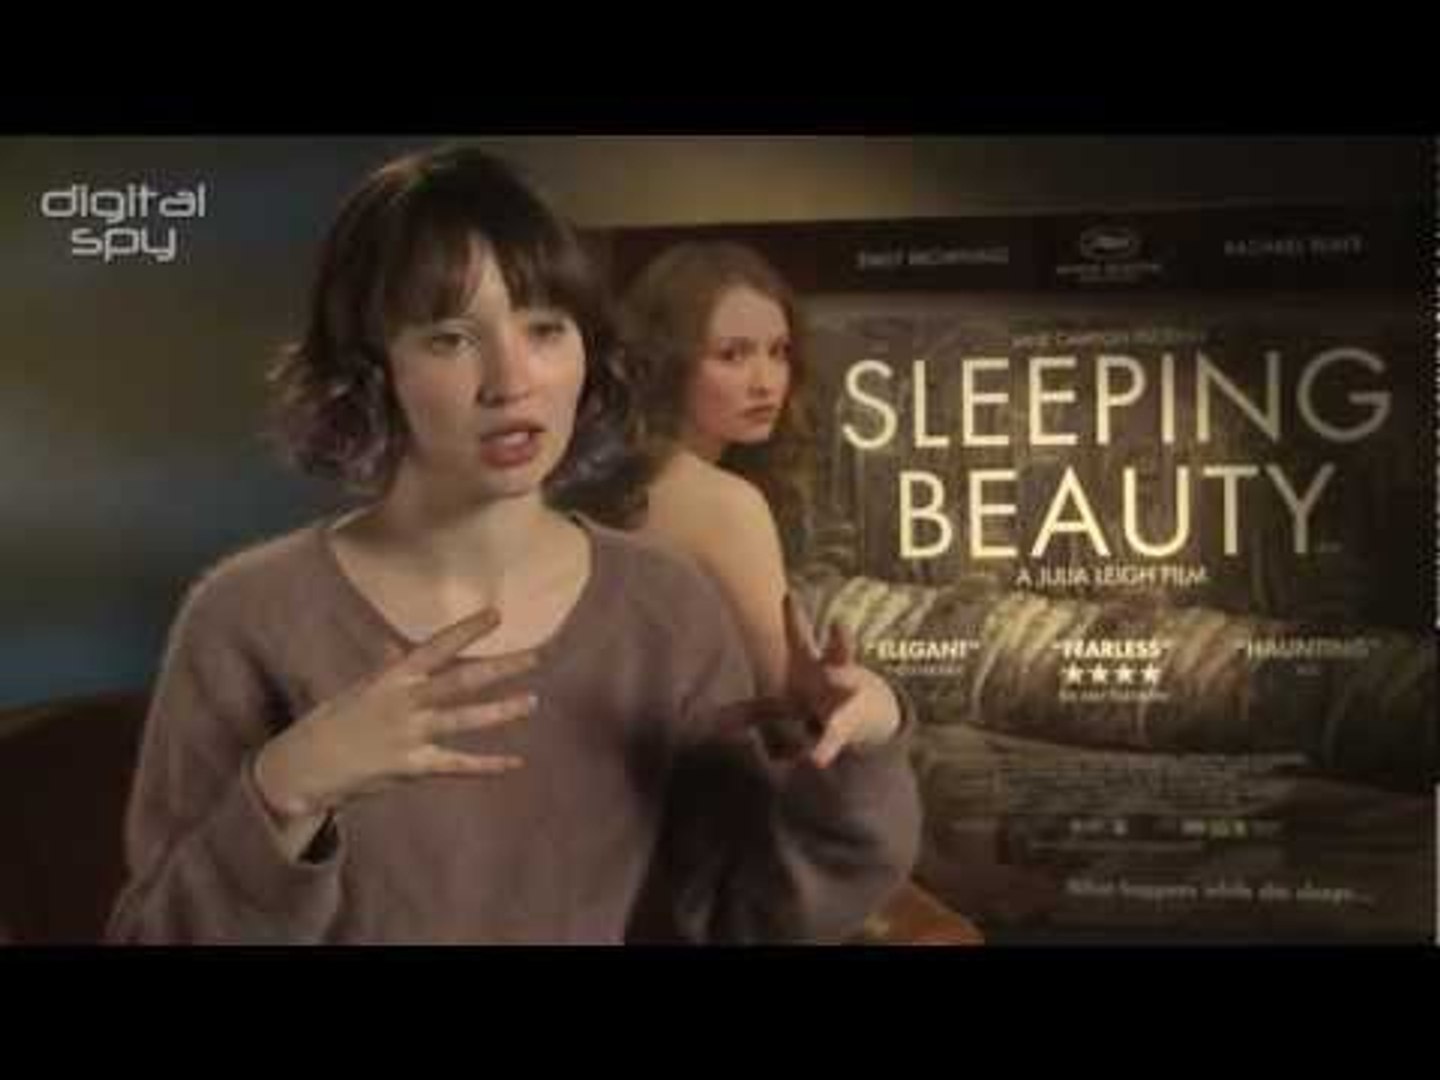 SLEEPING BEAUTY [Blu-ray]: : Movies & TV Shows